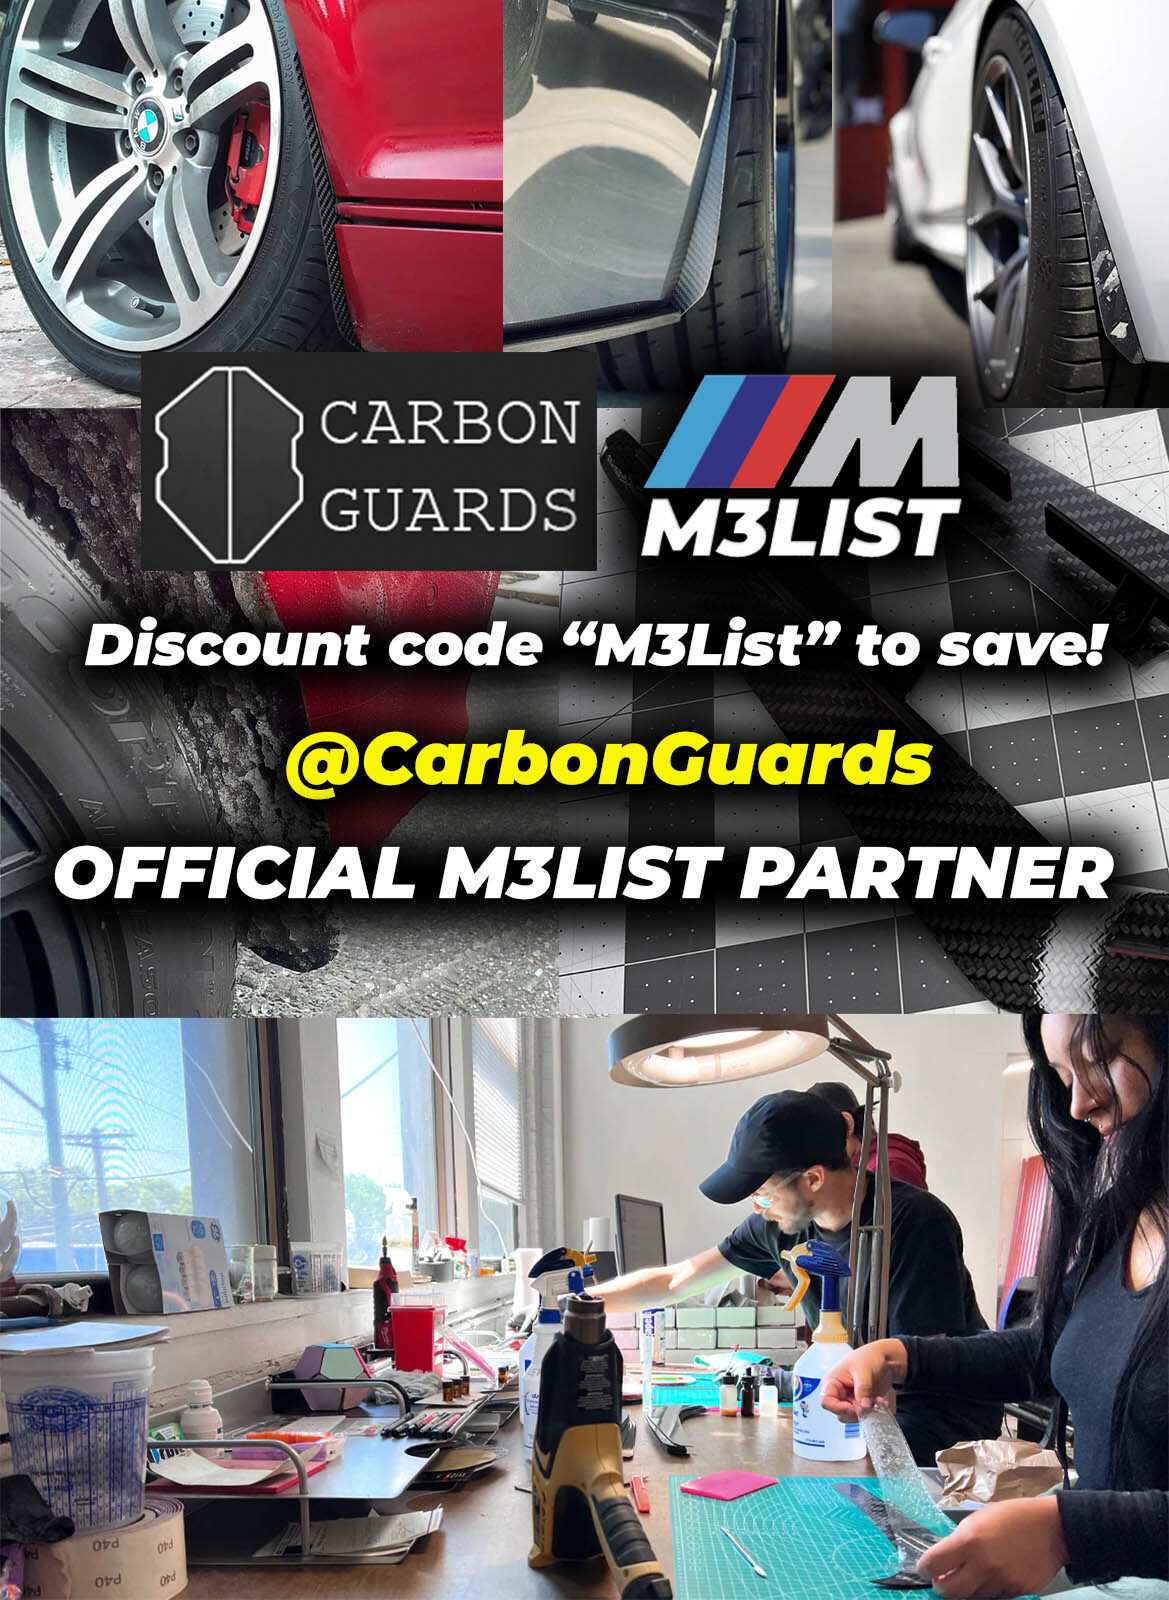 Carbon guards partners with M3List! Carbon fiber mud flaps for your BMW M3.